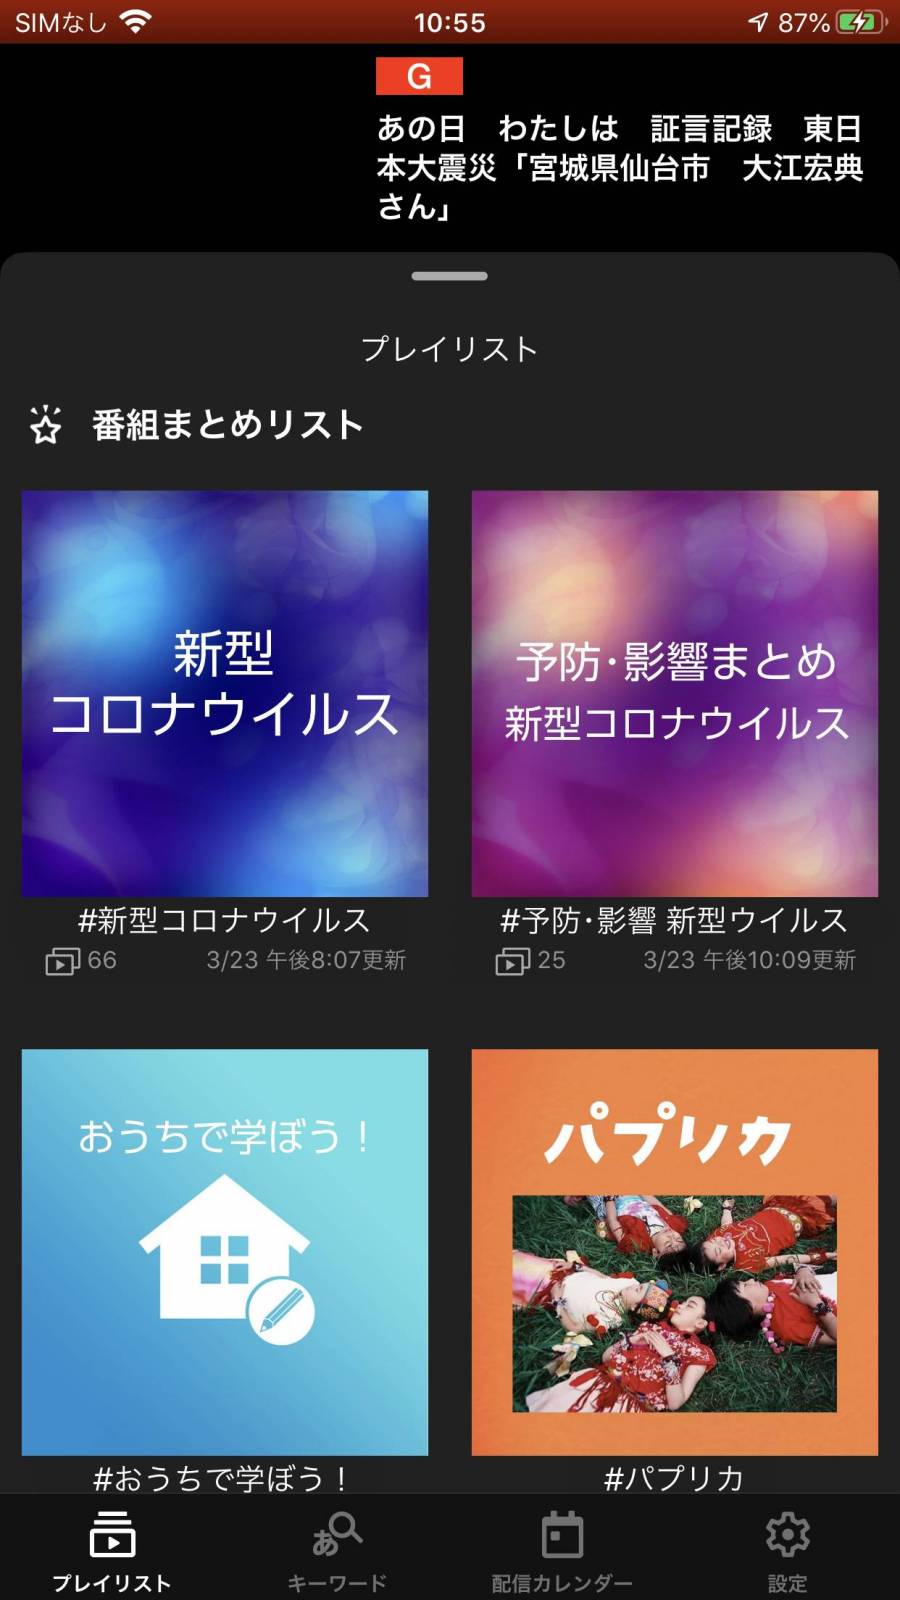 『NHKプラス』スマホアプリ プレイリスト画面